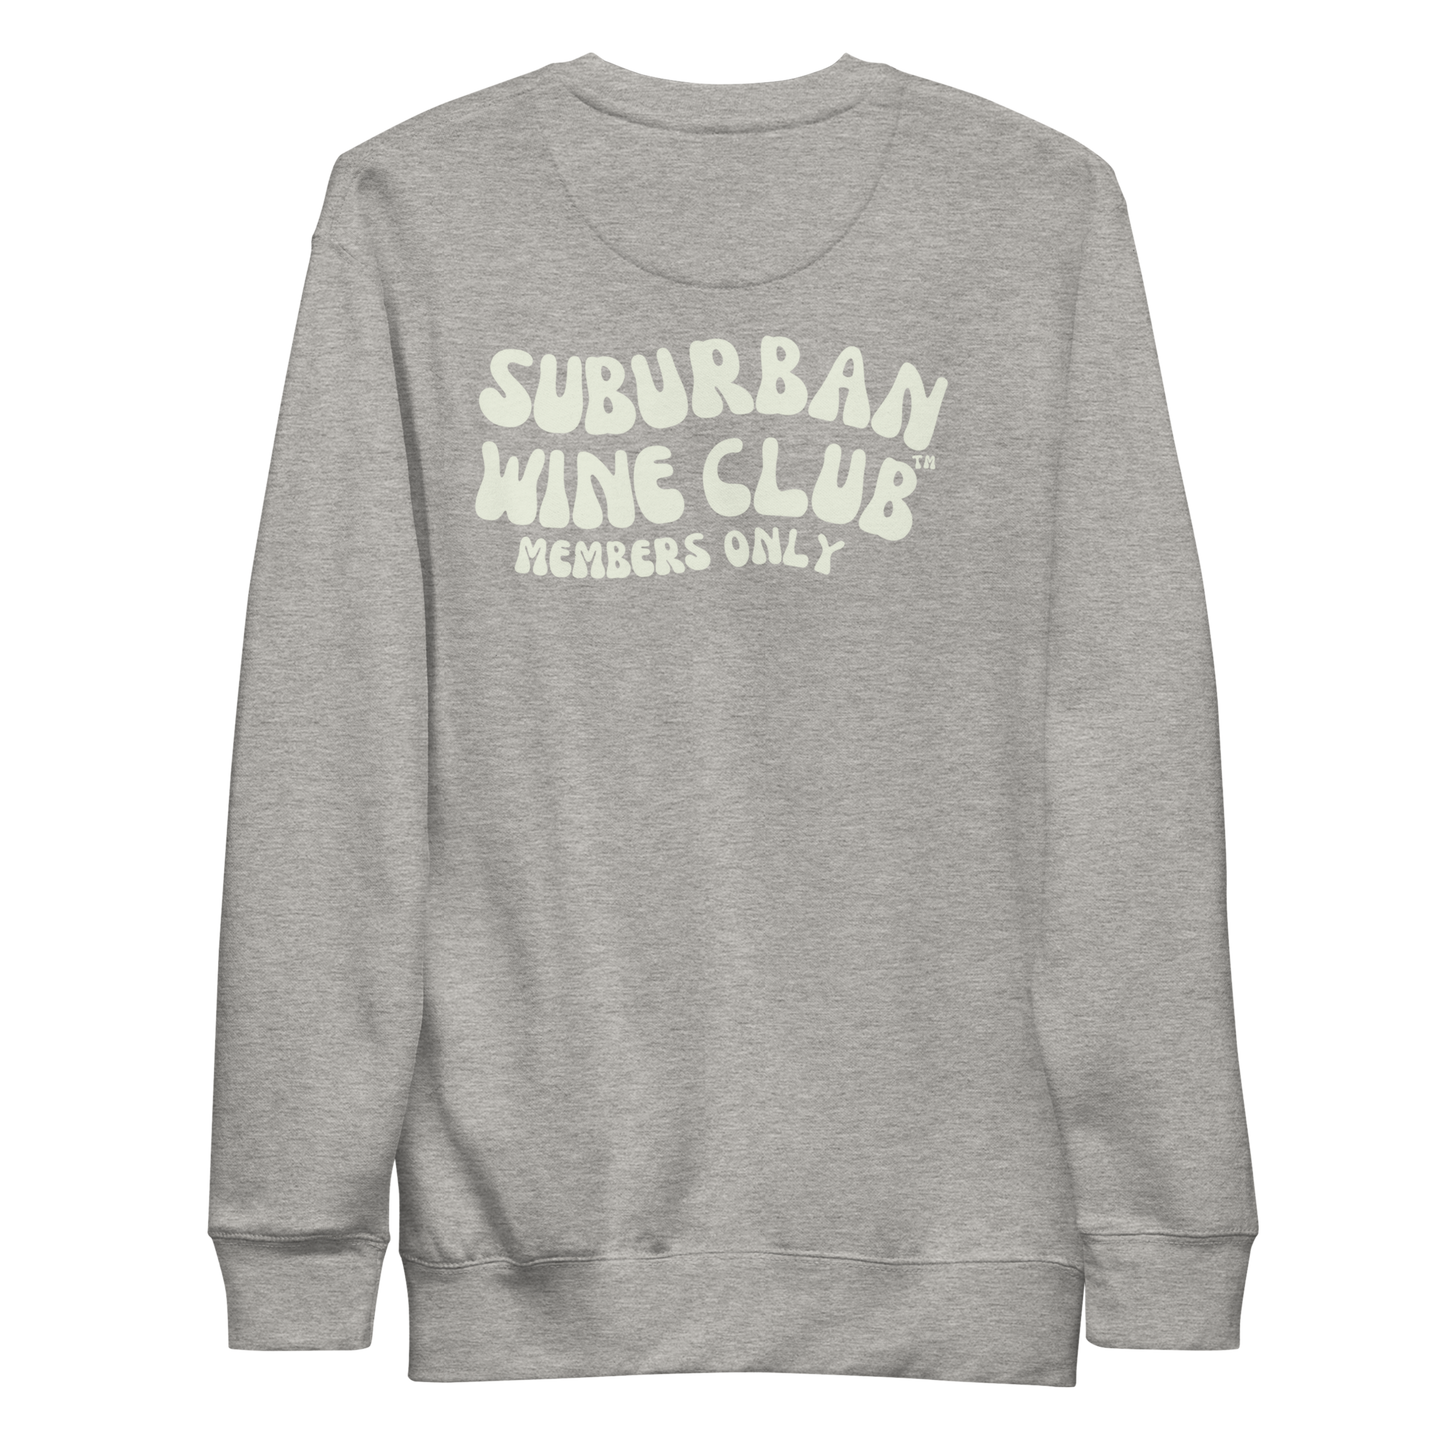 Suburban WIne Club™ Premium Sweatshirt | Cotton Heritage M2480 front/back